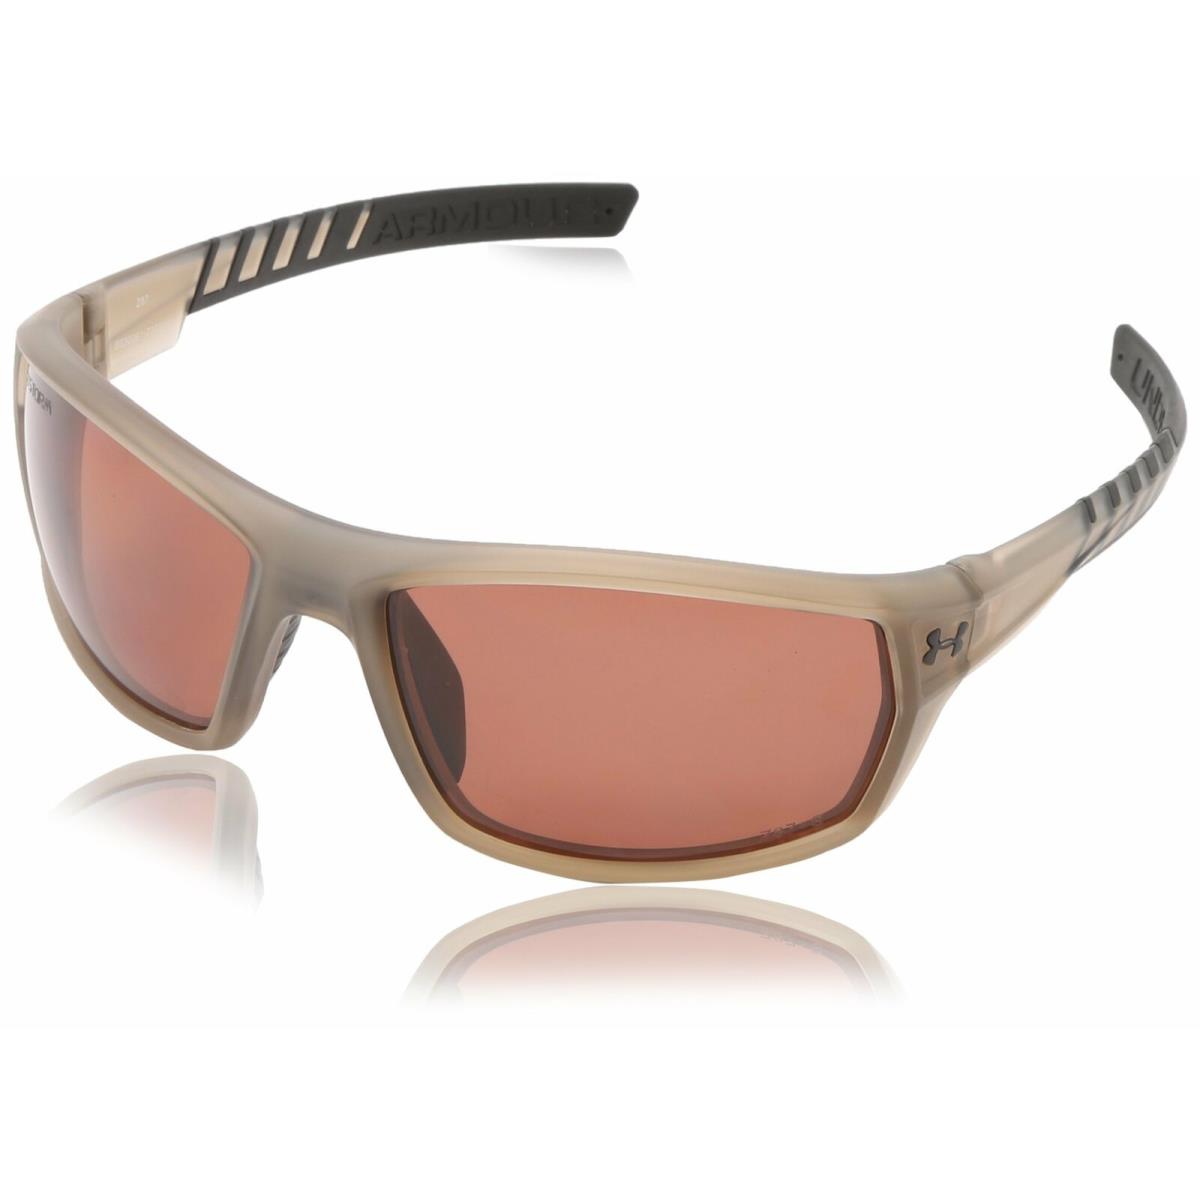 Under Armour Ranger Brown Polarized Sport Sunglasses Ansi Z87.1 Impact Resistant